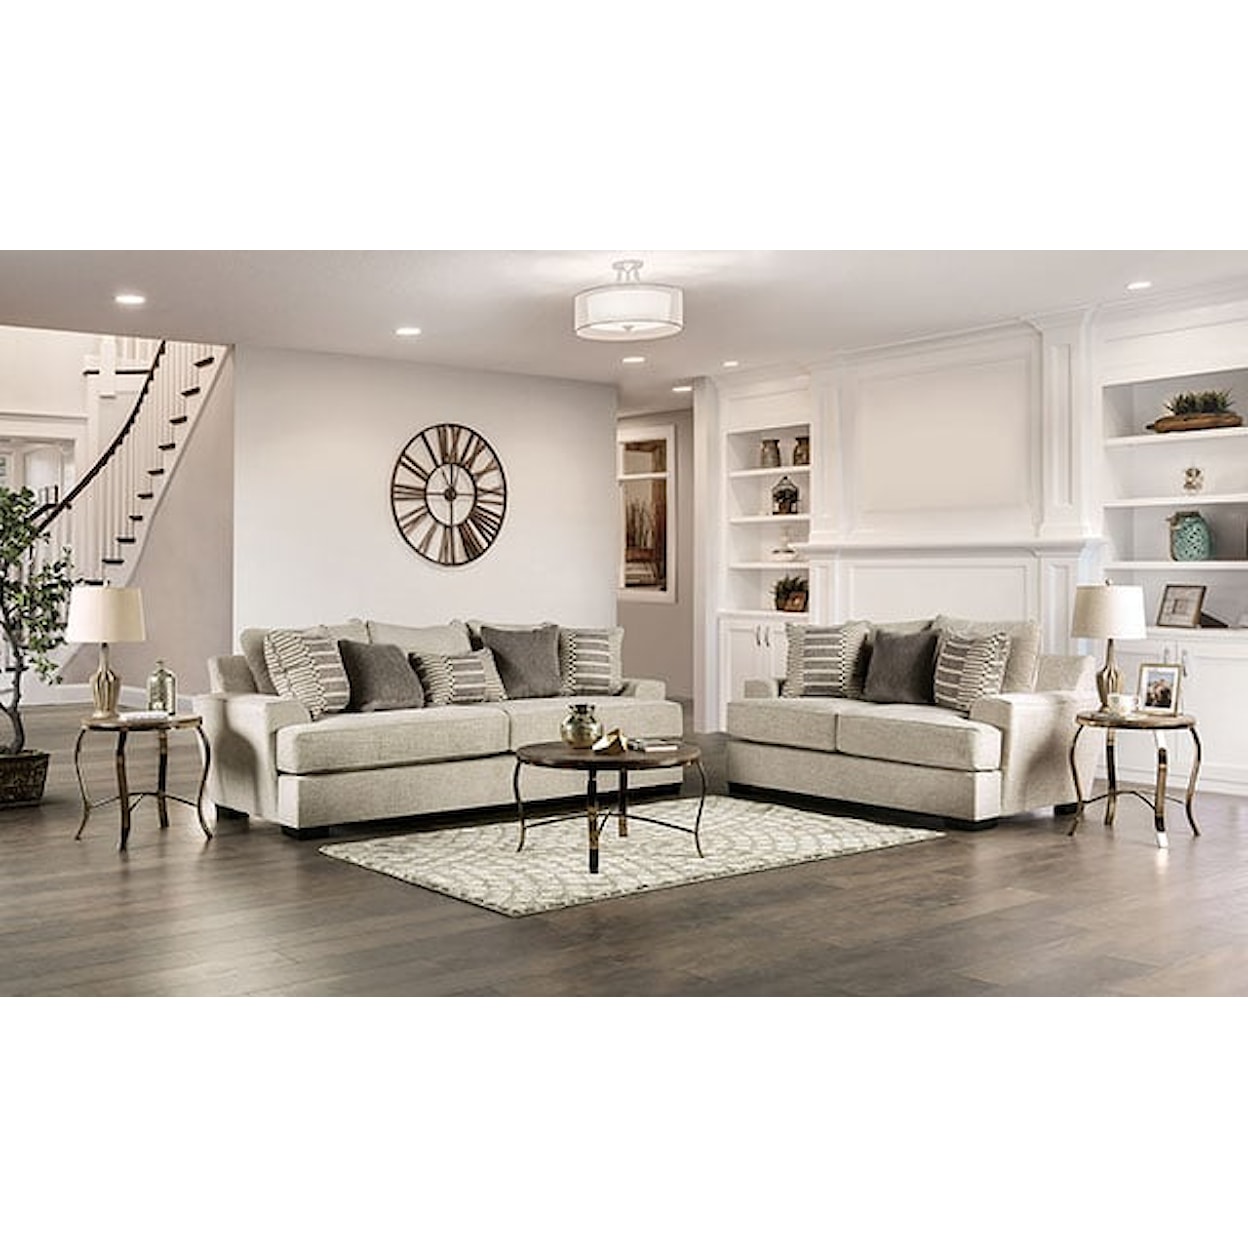 Furniture of America Holborn Sofa